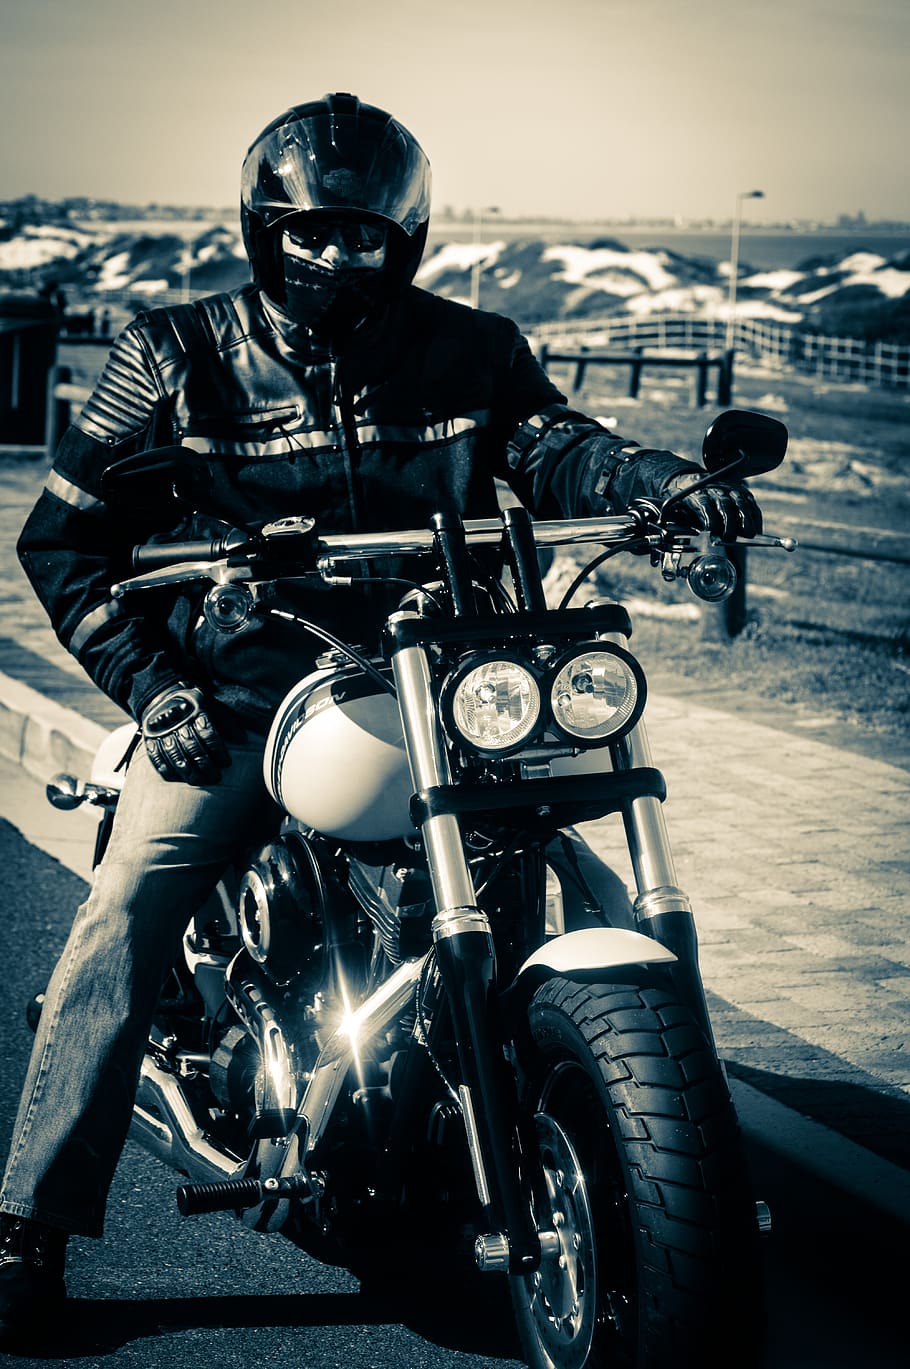 rider, adventure, helmet, motorbike, recreation, motorcycle, man, mode of transportation, headwear, transportation